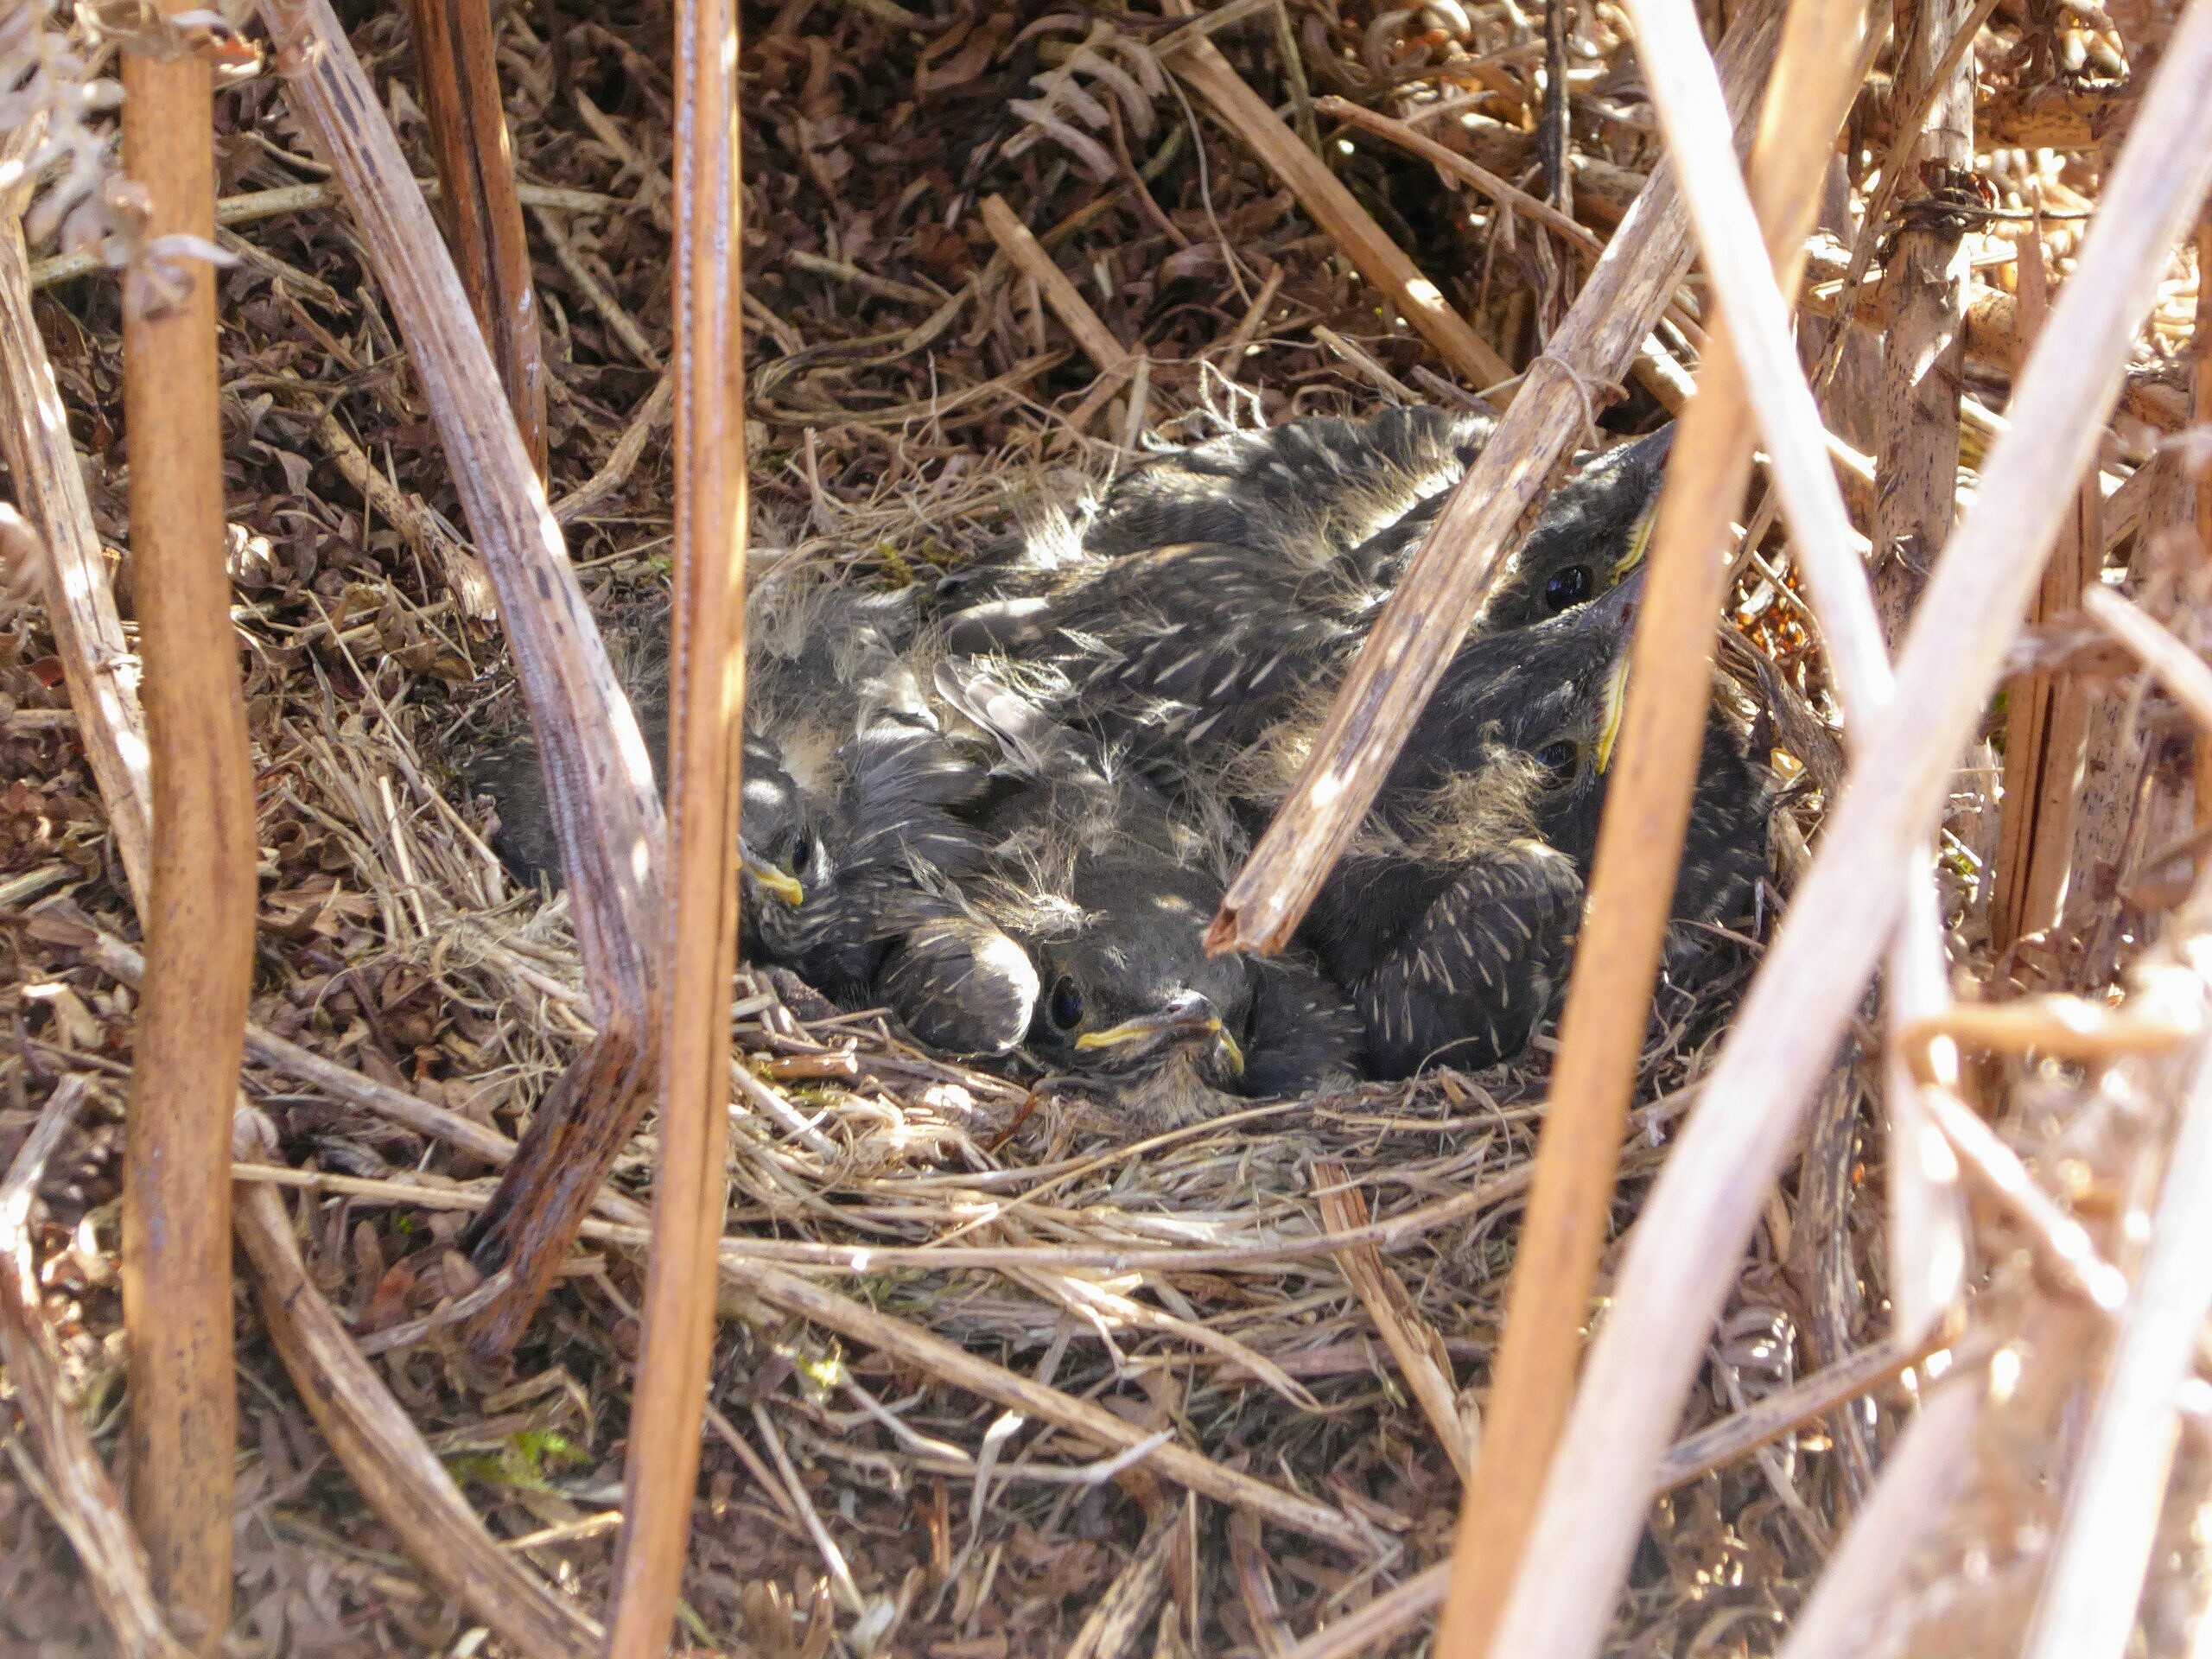 Four Ring Ouzel chicks around 11 days old, not far off fledging  © Kim Leyland